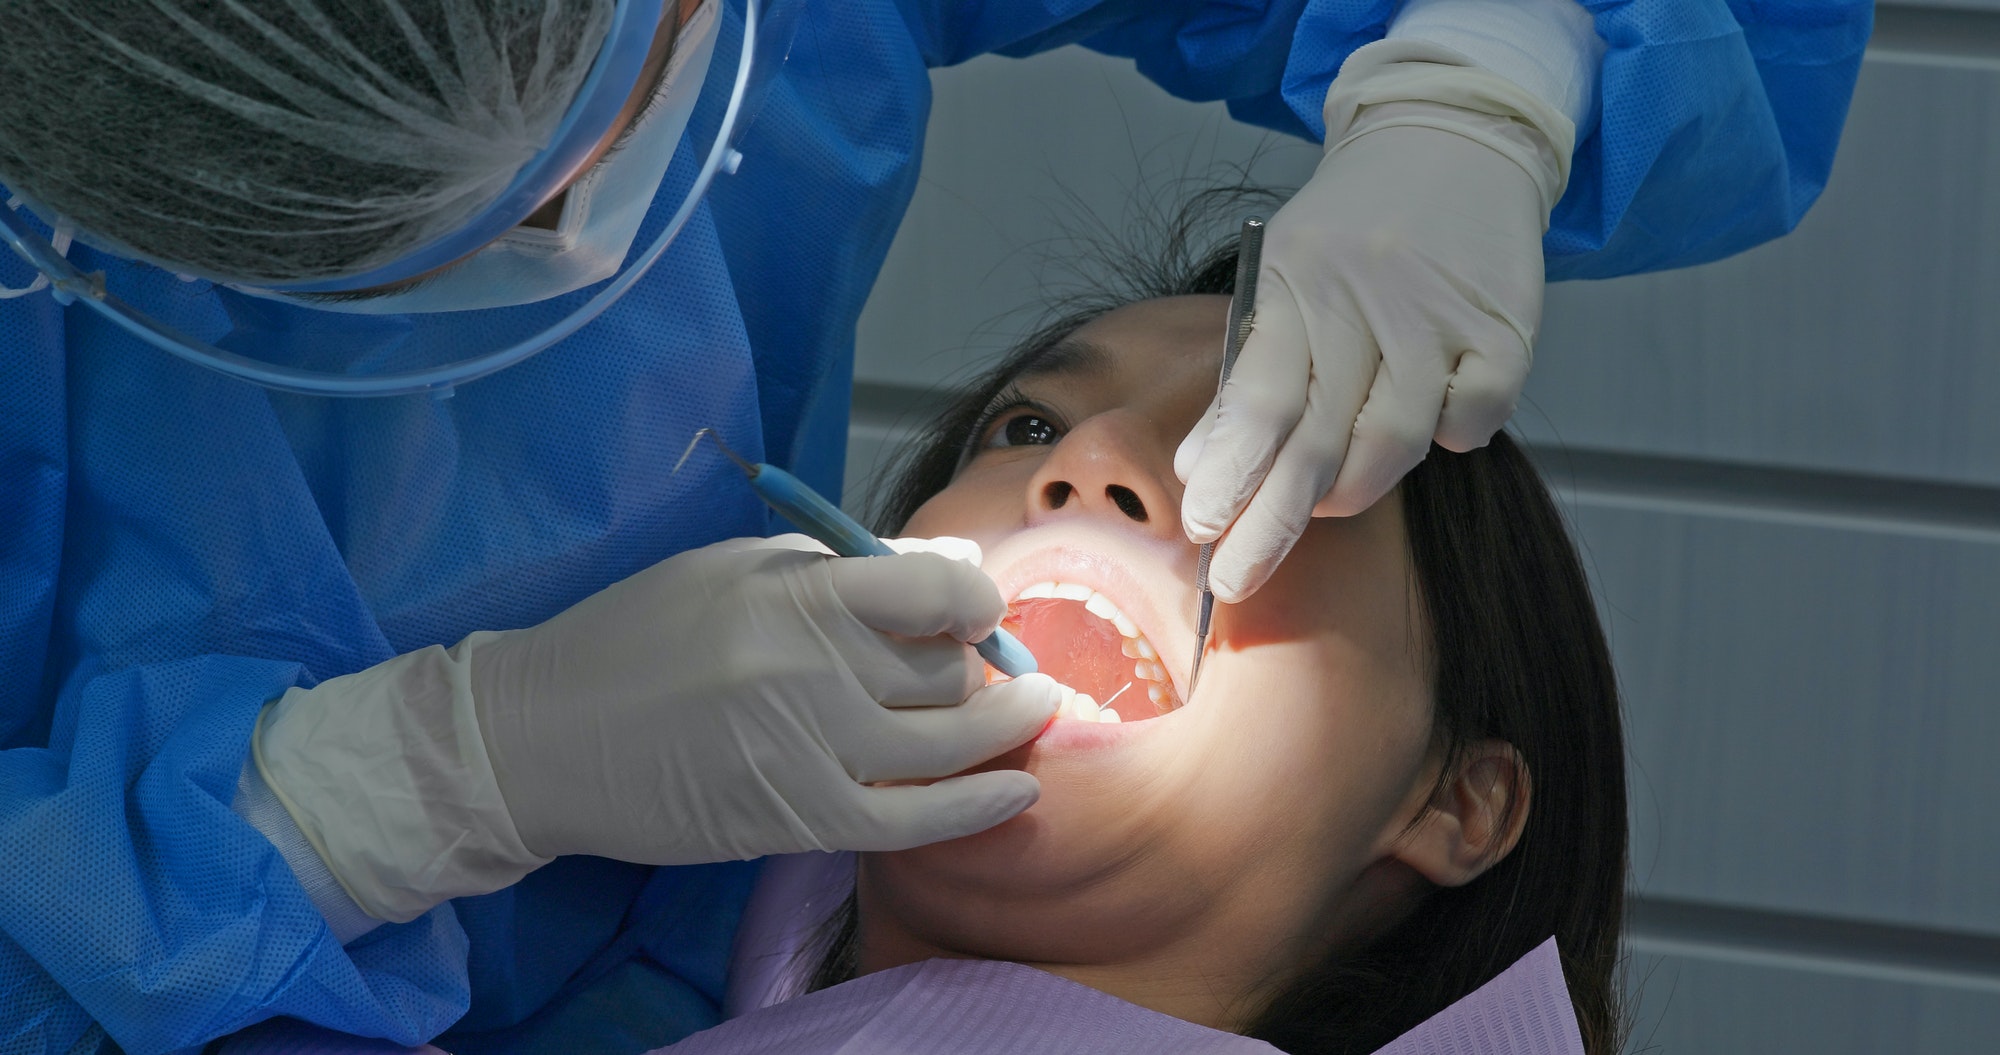 Woman undergo dental scaling treatment